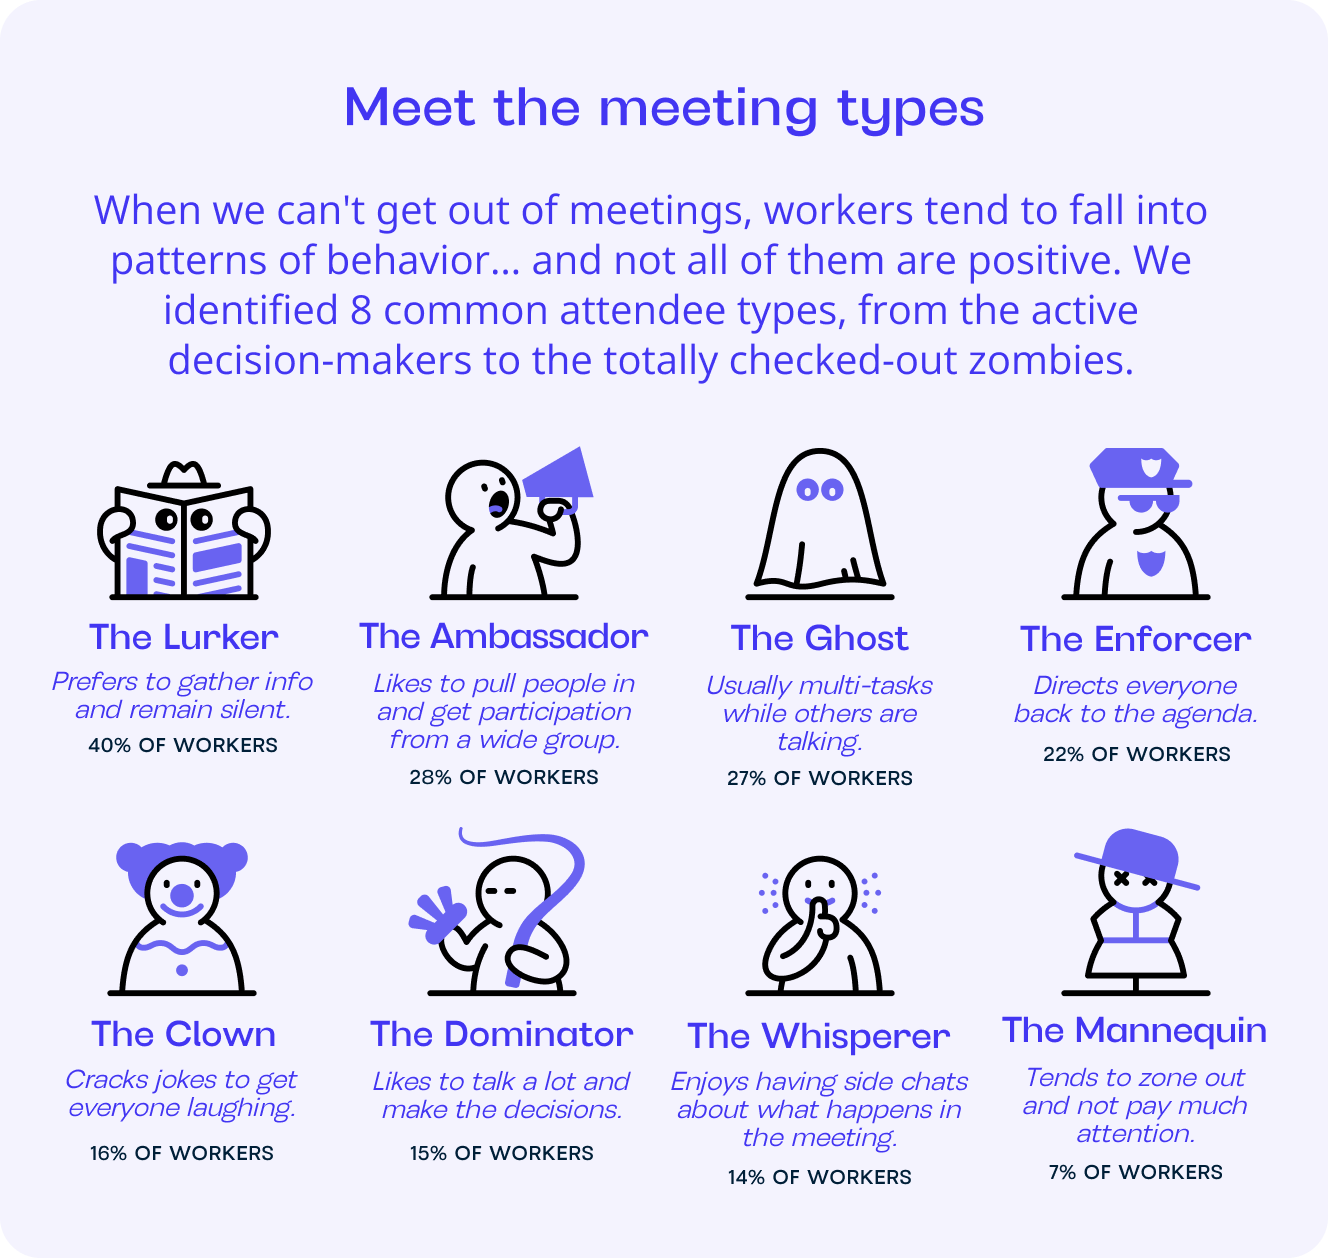 Meet the meeting types graphic: The lurker, ambassador, ghost, enforcer, clown, dominator, whisperer, mannequin